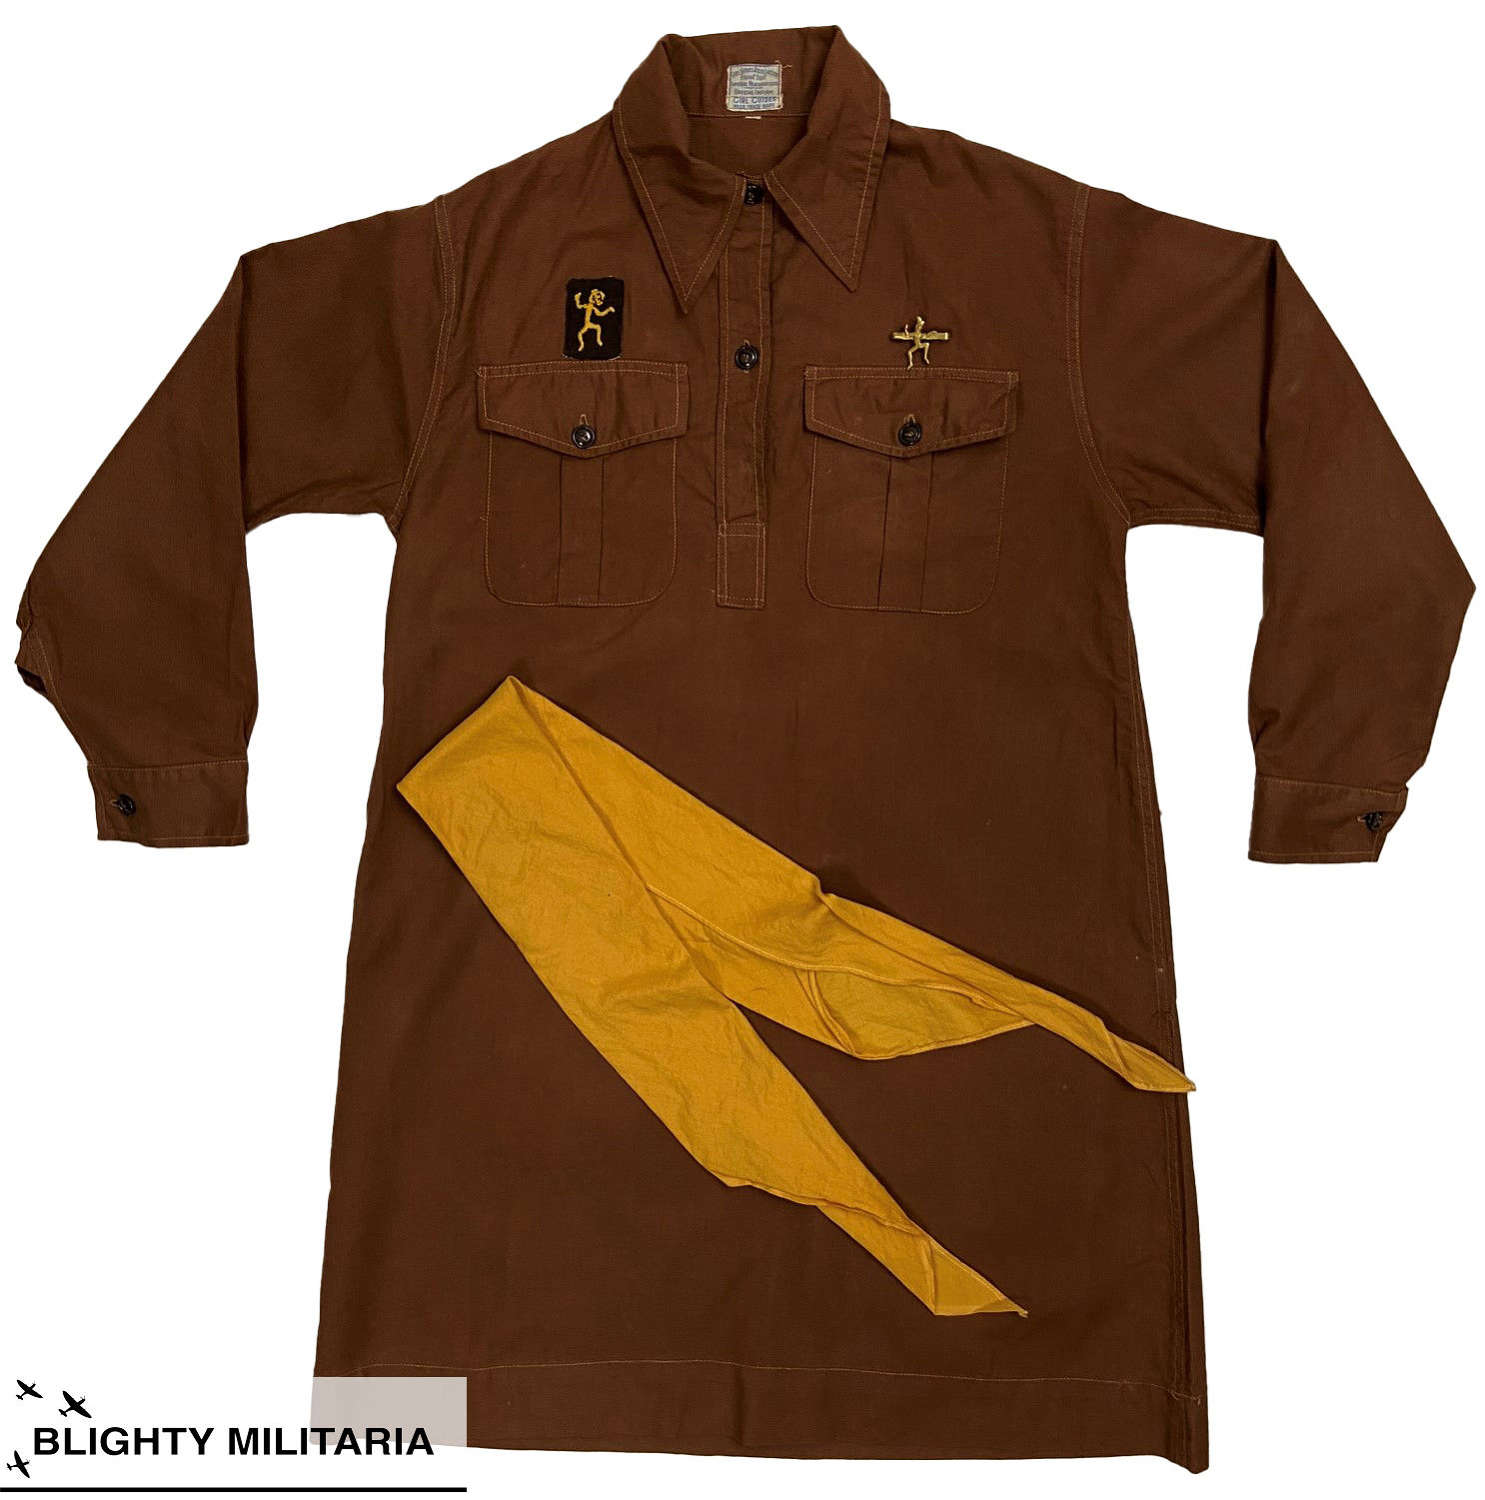 Original 1940 Girl Guides Brownies Uniform Dress and Tie